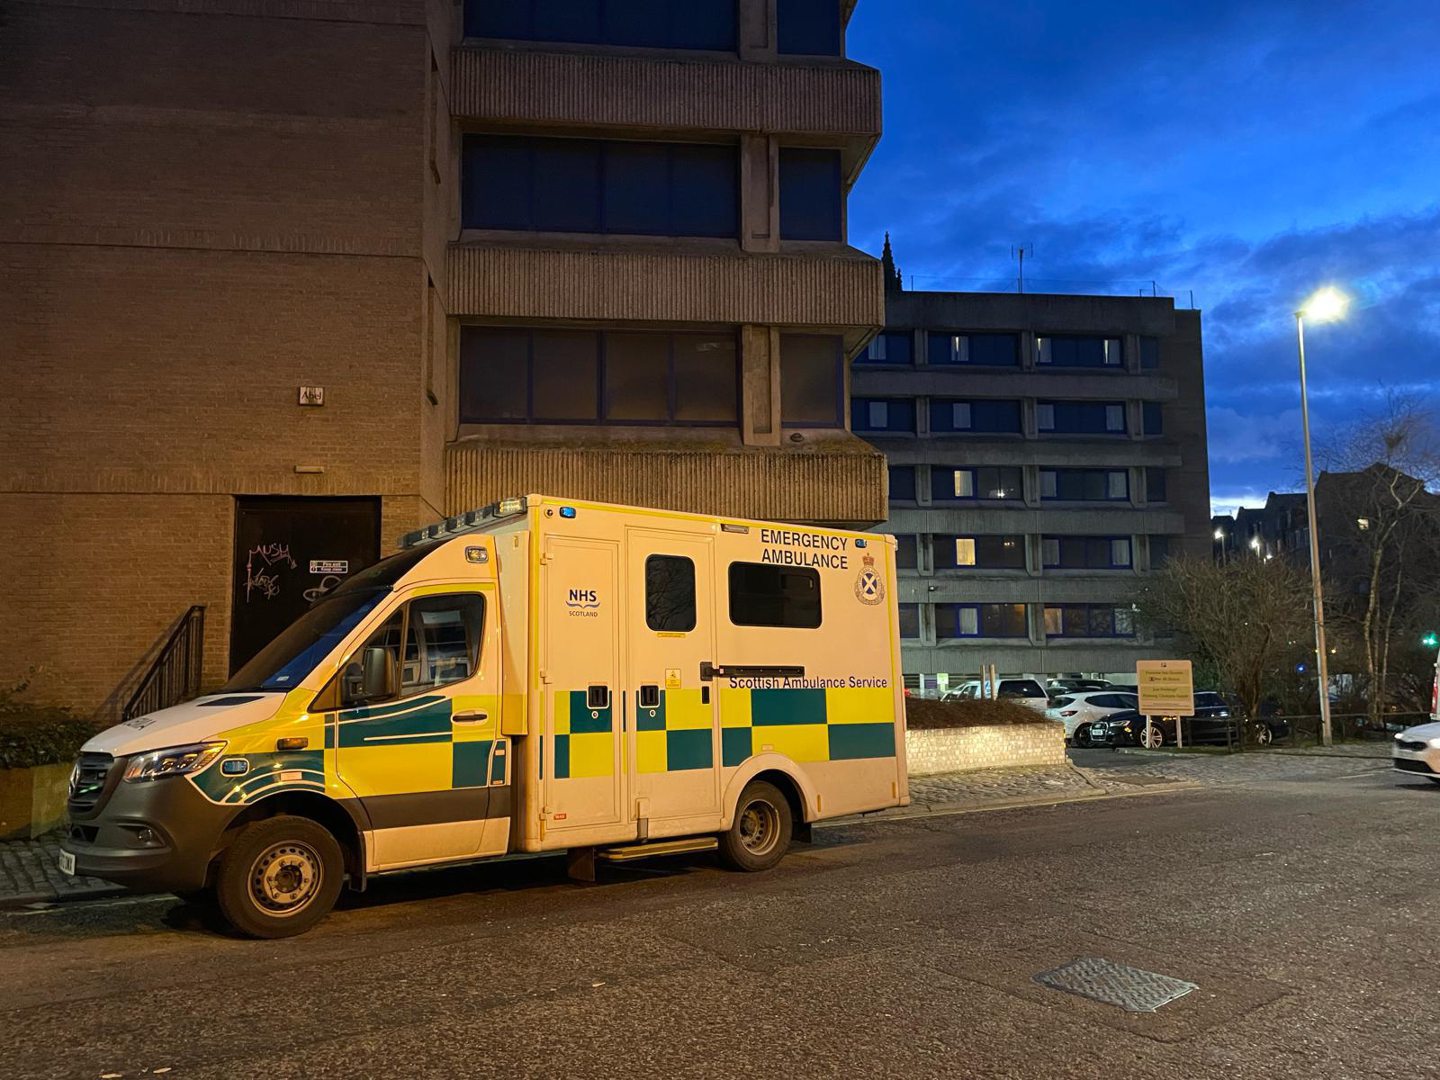 Ambulance parked around the corner on Mealmarket Street.